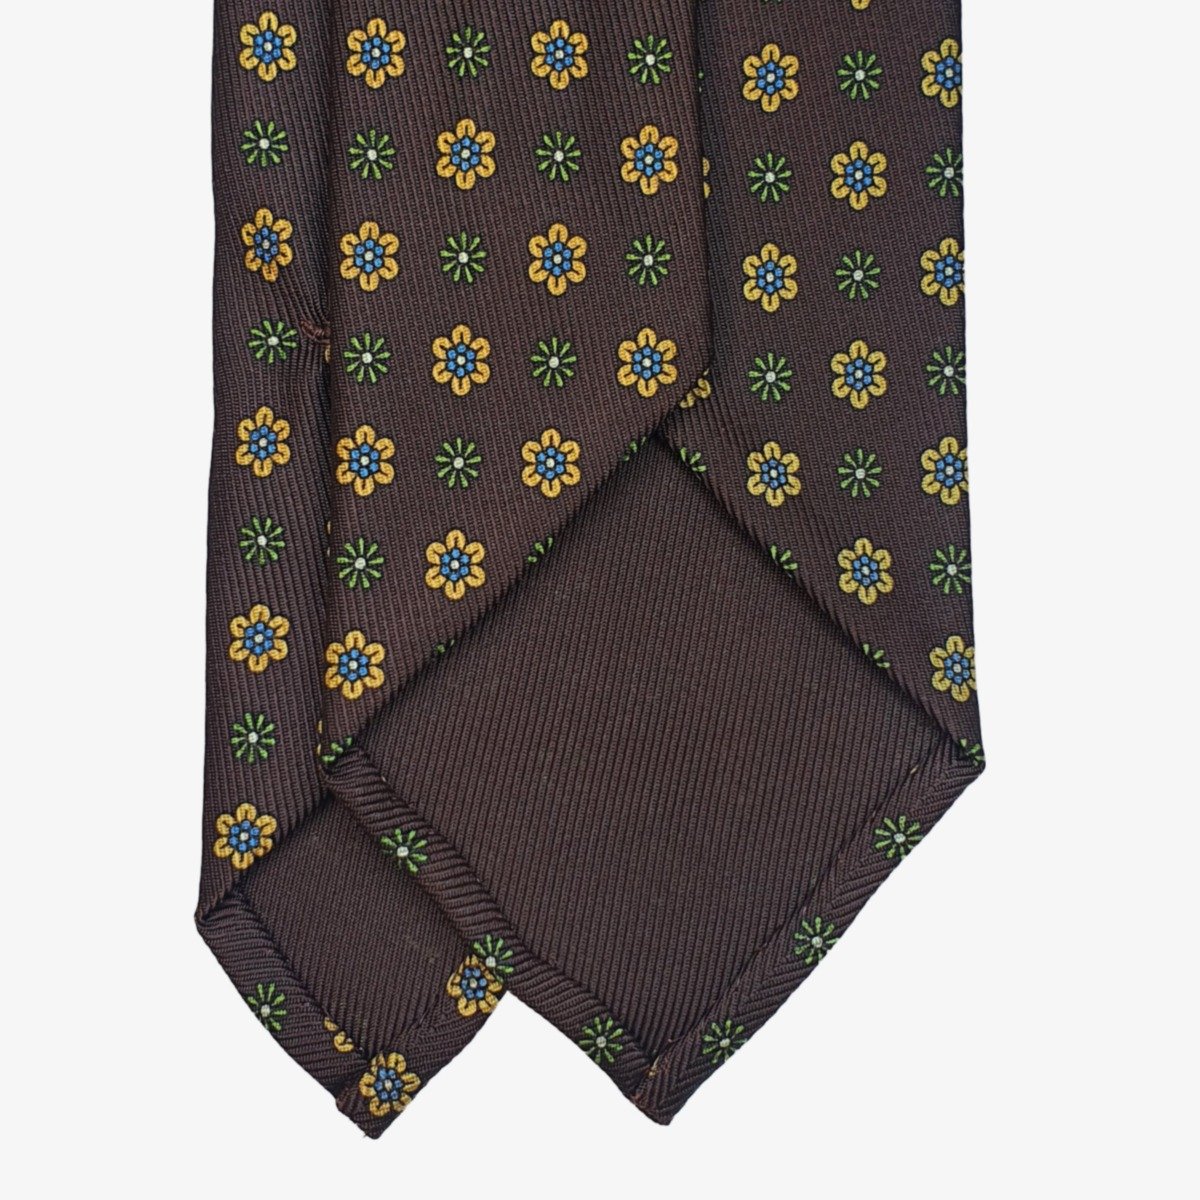 Shibumi Firenze 50oz dark brown silk tie with yellow floral pattern